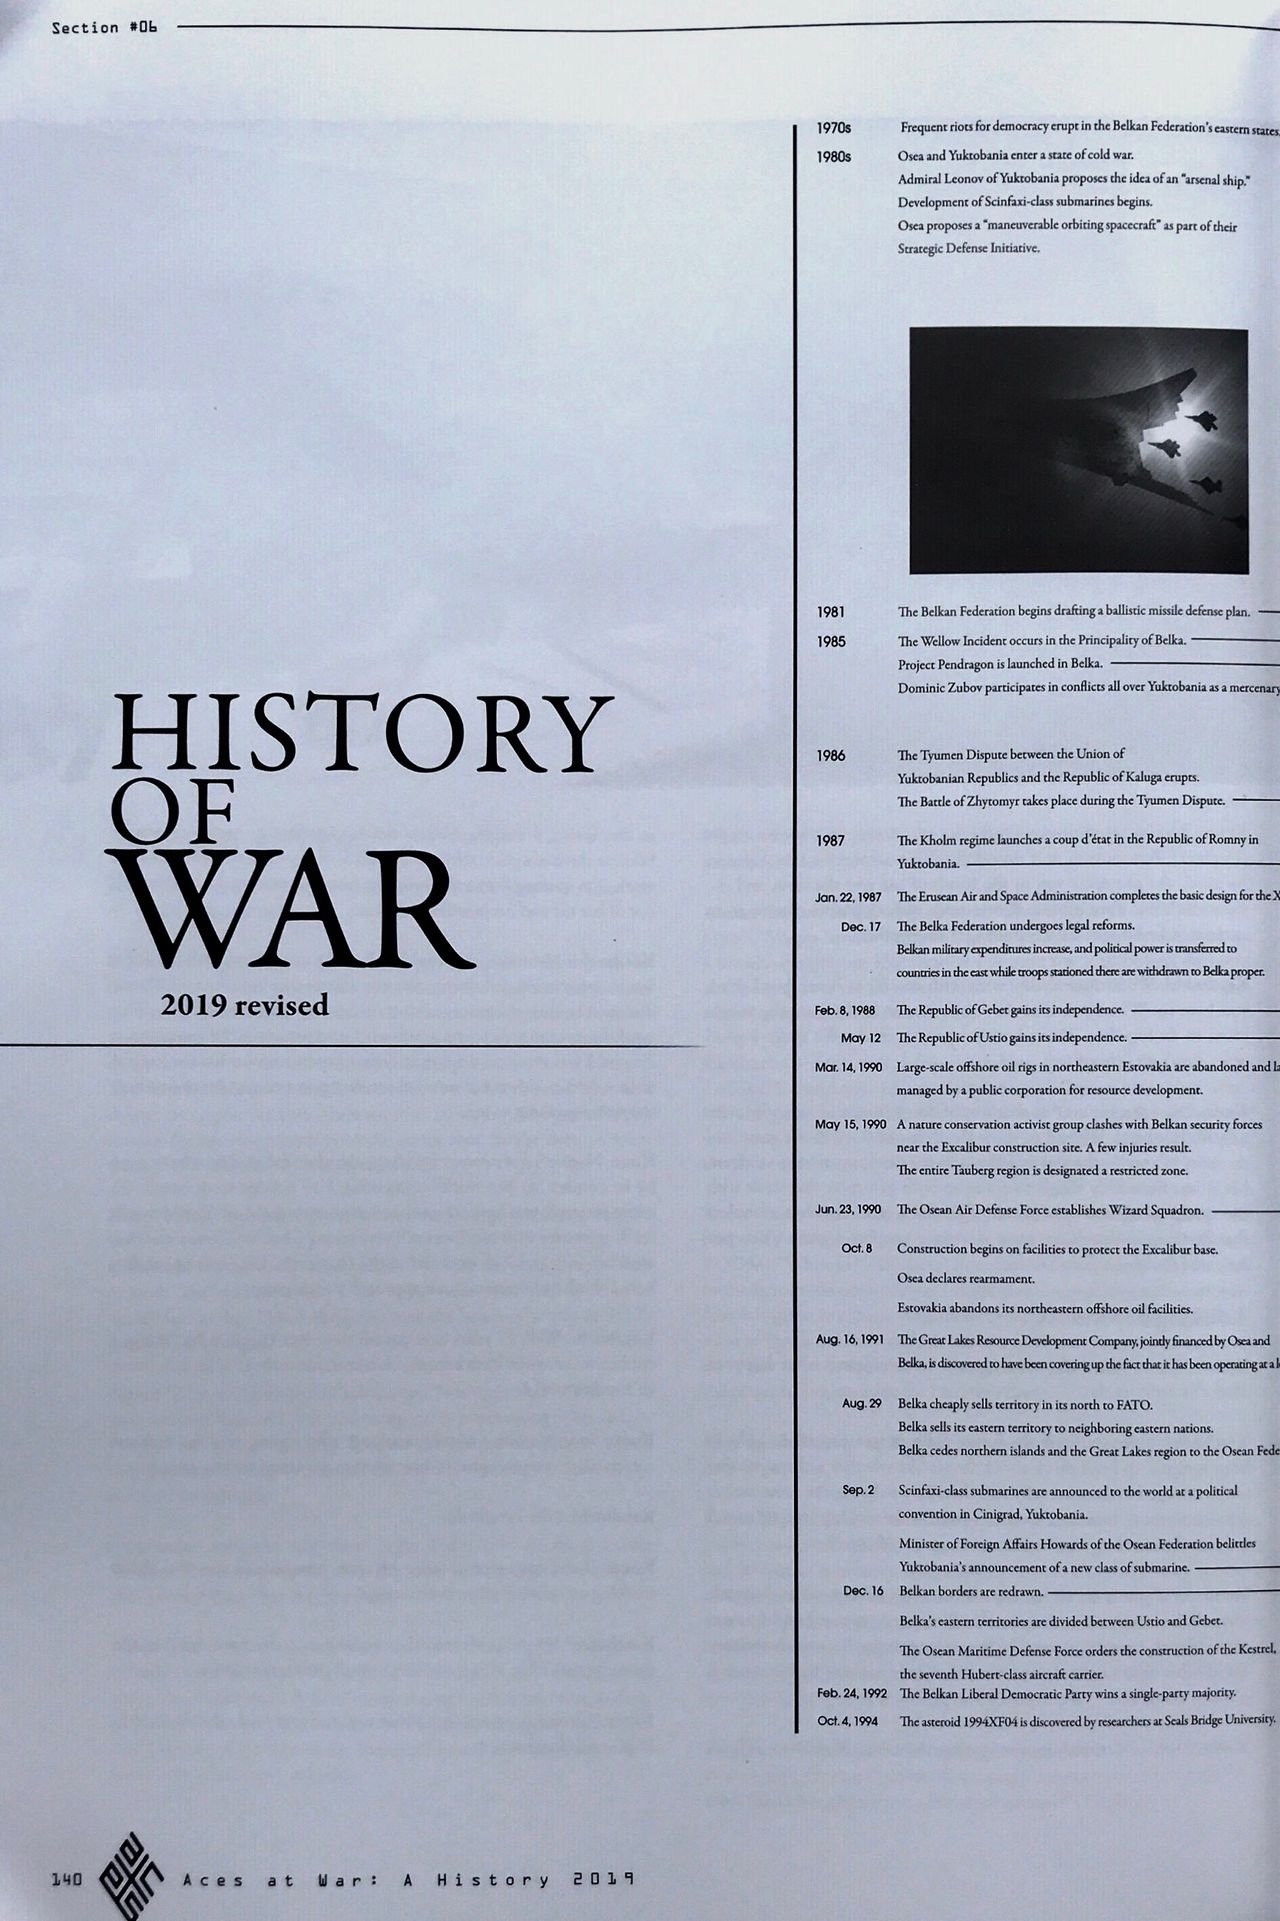 [Koda Kazuma] Aces at War - A History 2019 [English] 113